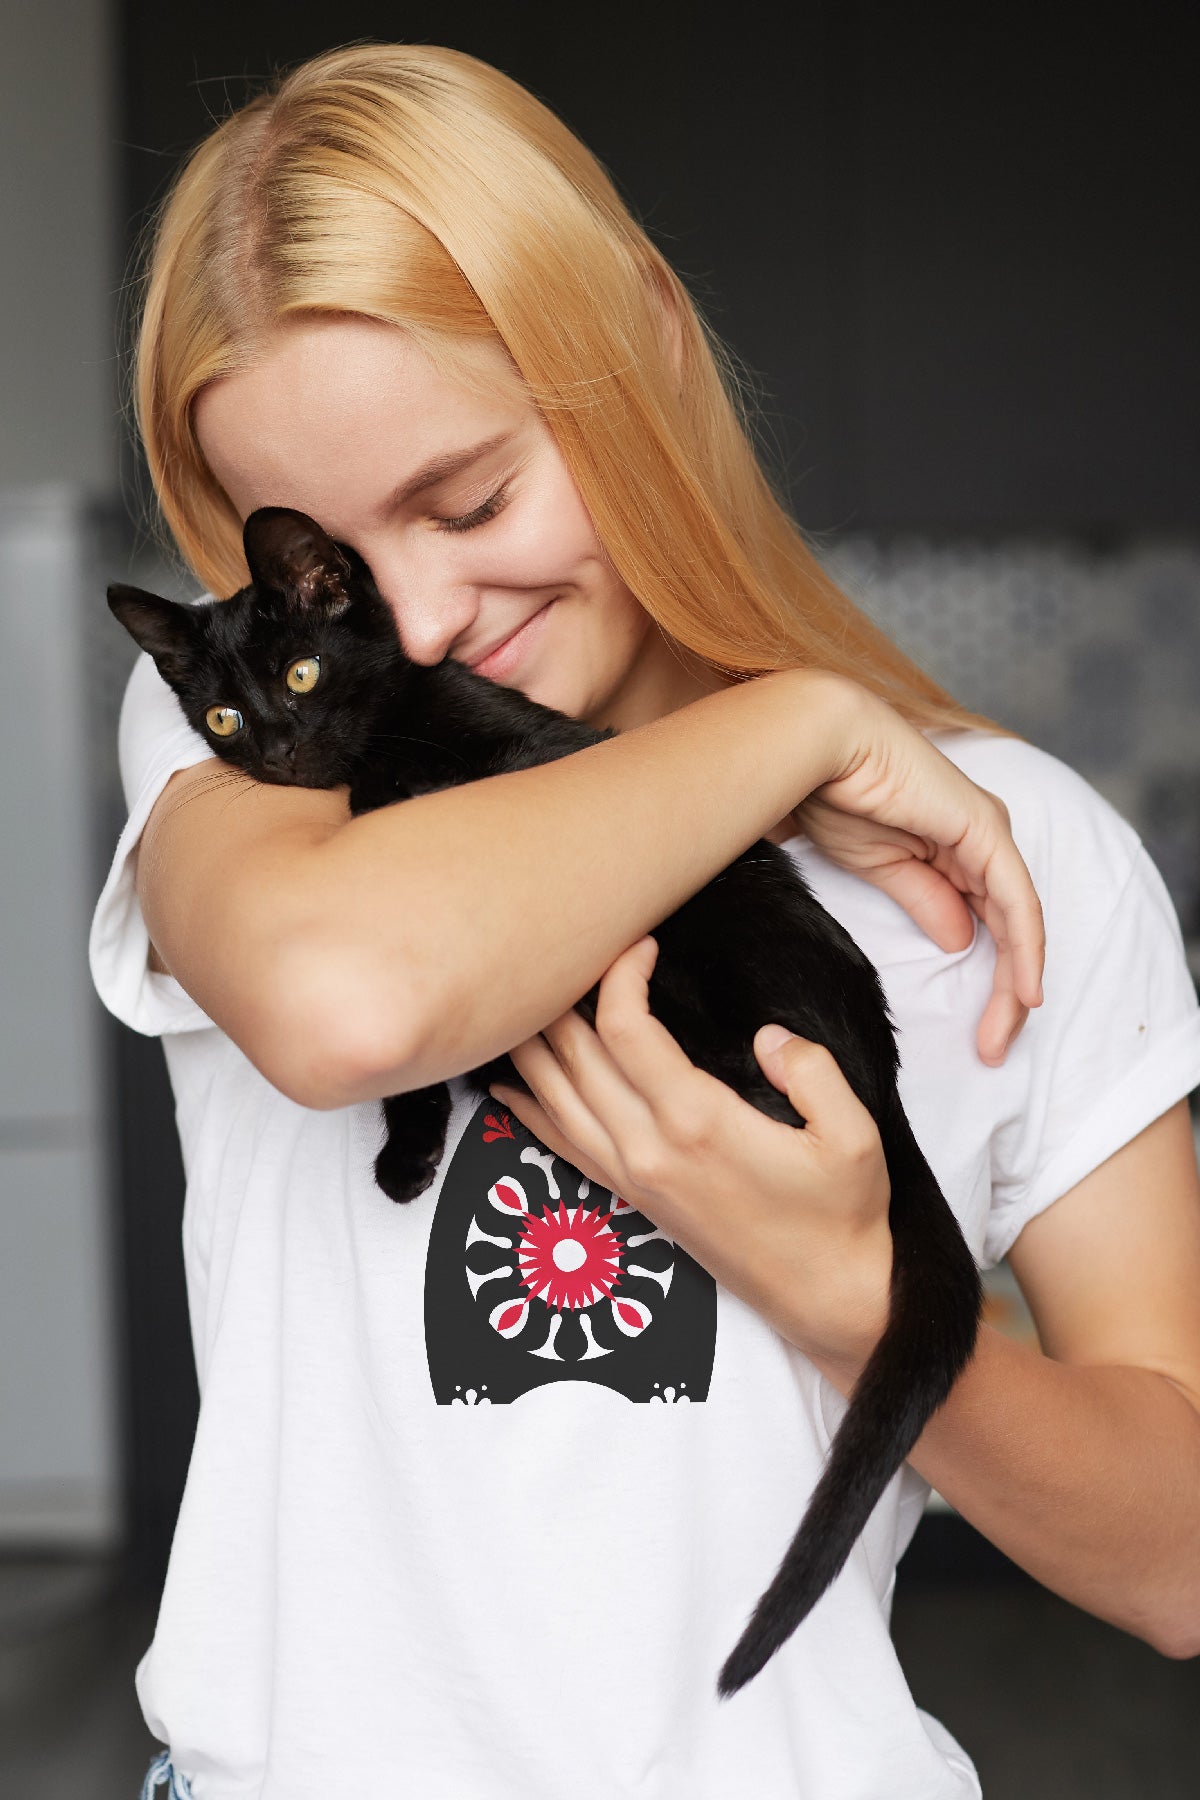 Woman wearing Behemoth t-shirt and holding a black kitten.